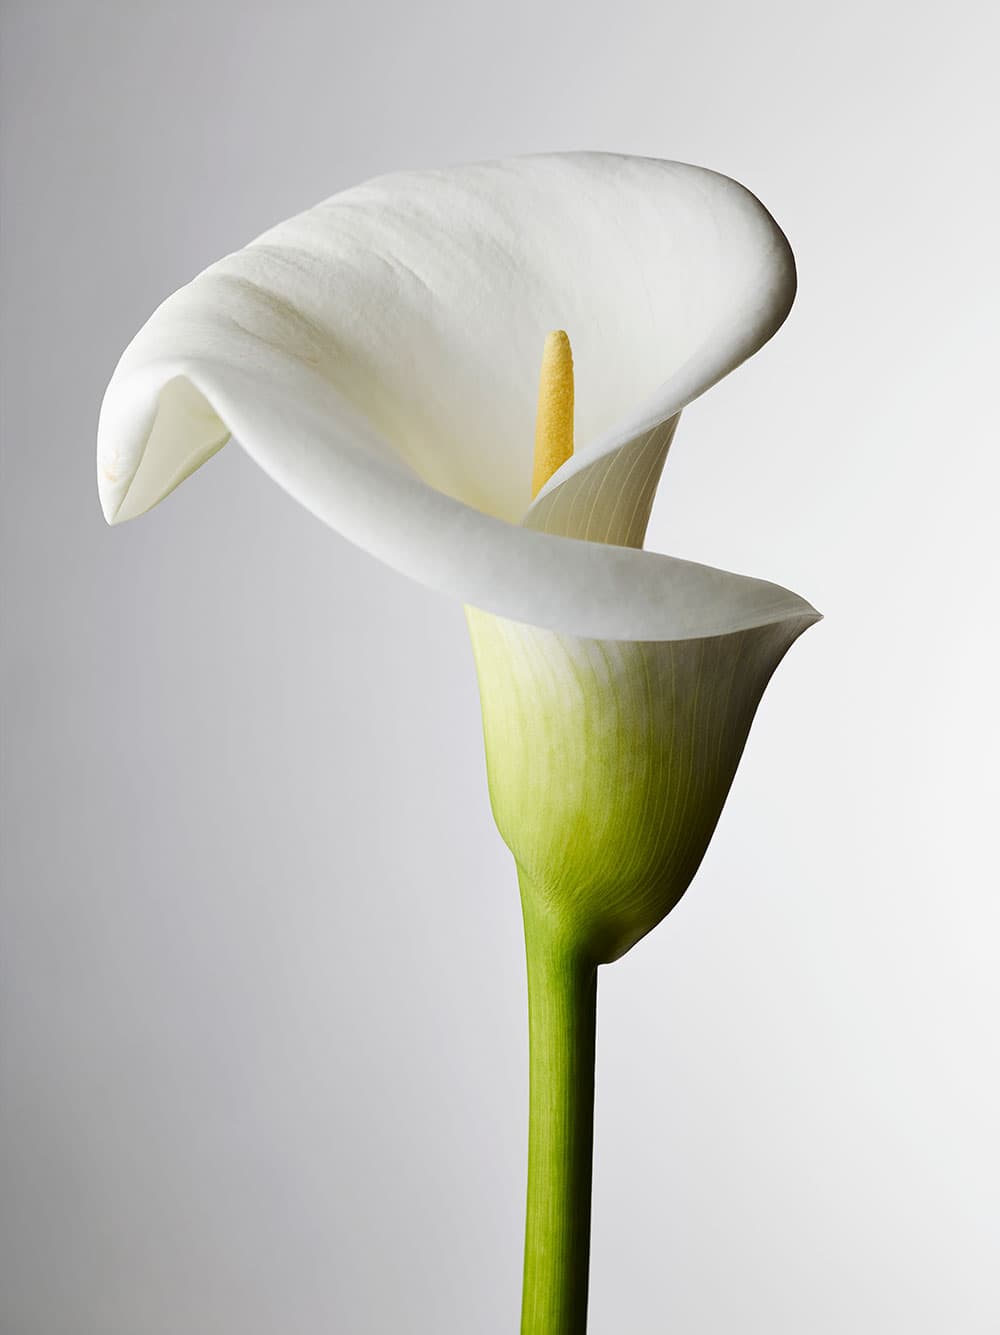 Pefect camera set-up - white balance flower